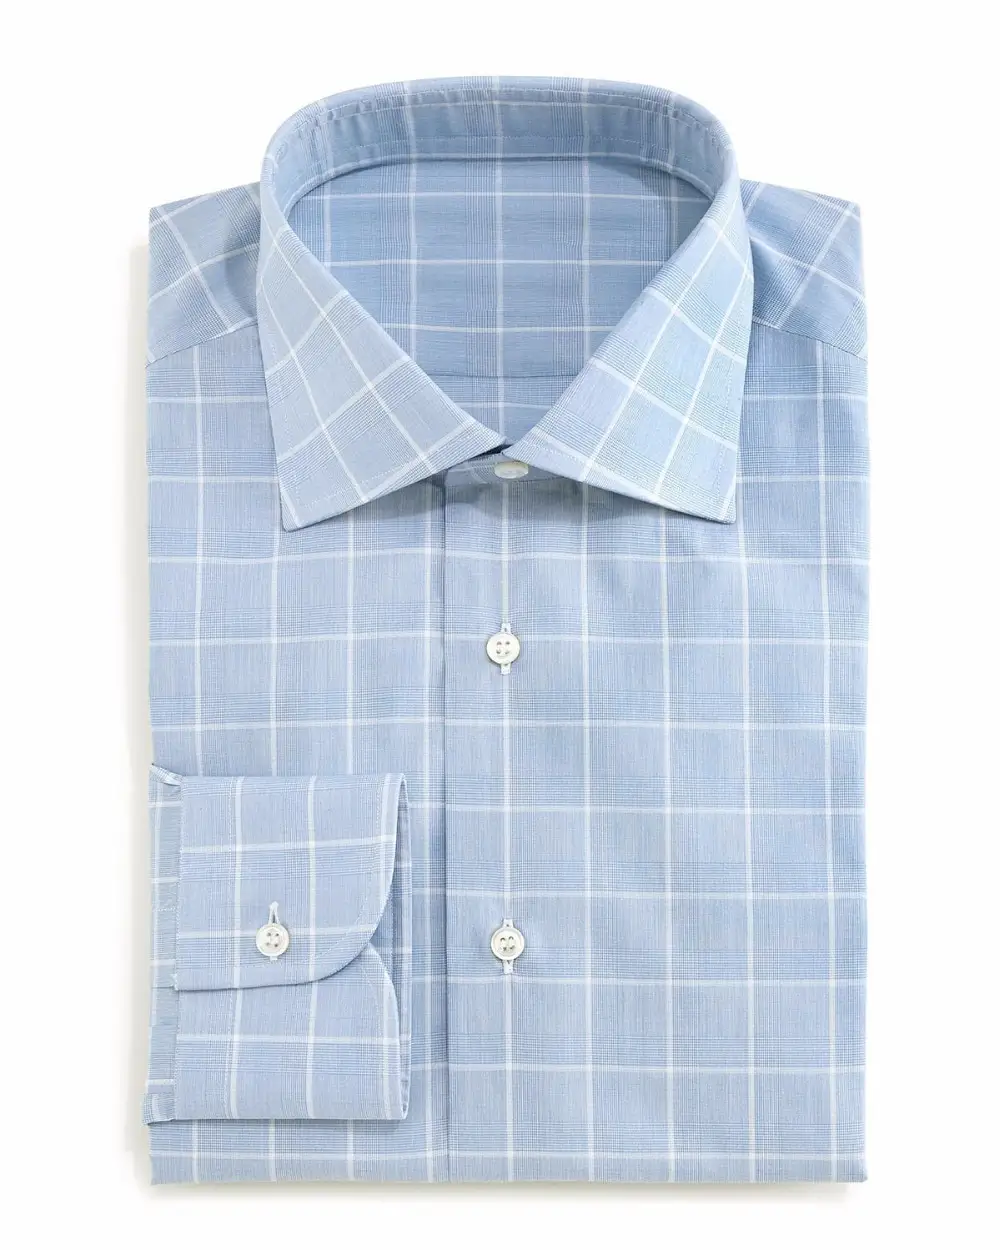 OEM ODM Custom 100% Cotton Long Sleeve Classic Man Formal Dress Shirt Cheap Price High Quality for Business men from VIETNAM